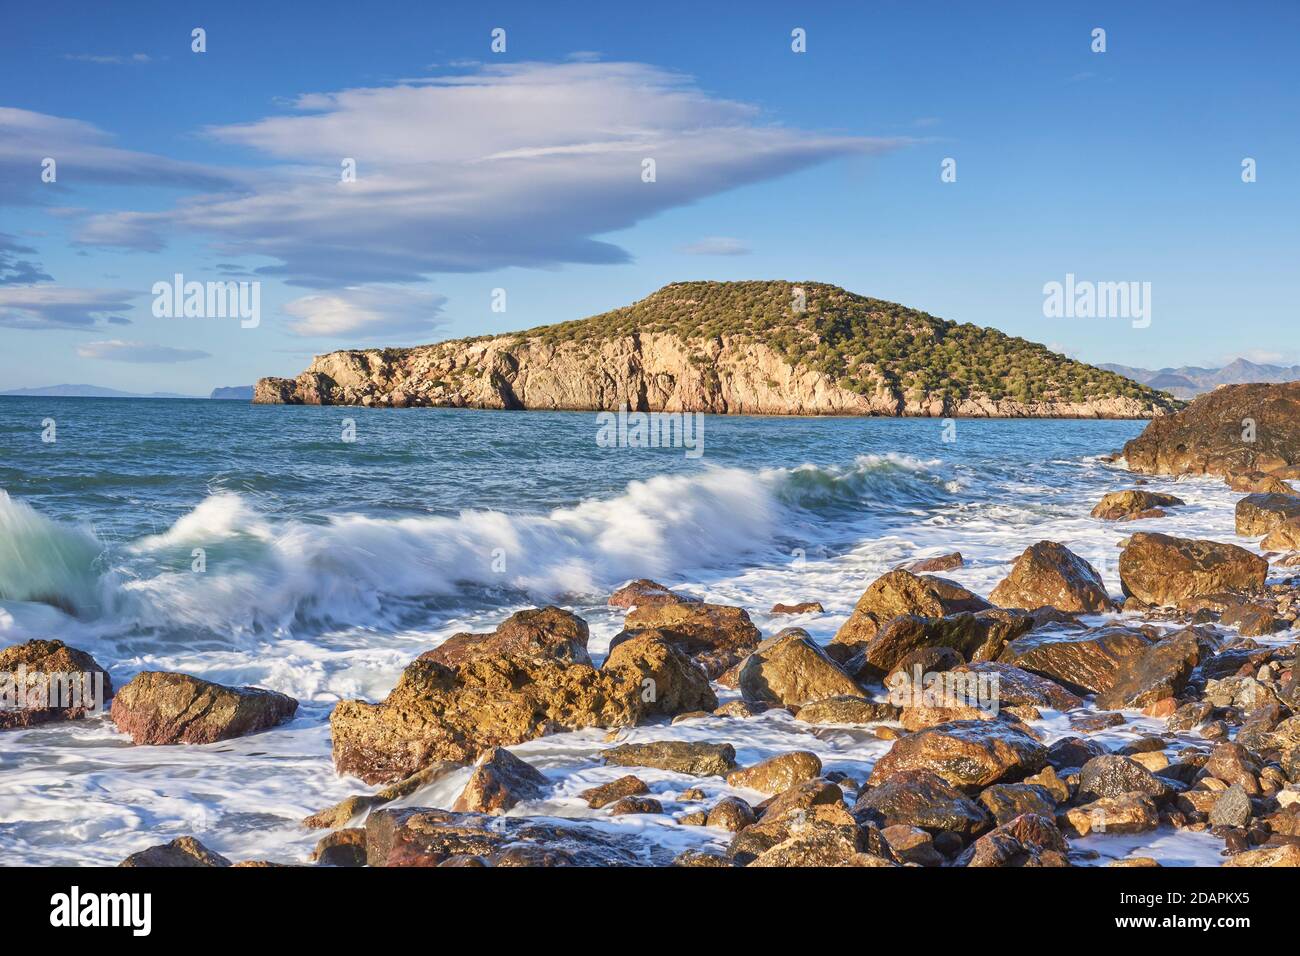 Rocky beach and waves in the Mediterranean Sea of Mazarron in the Murcia region. Spain Stock Photo